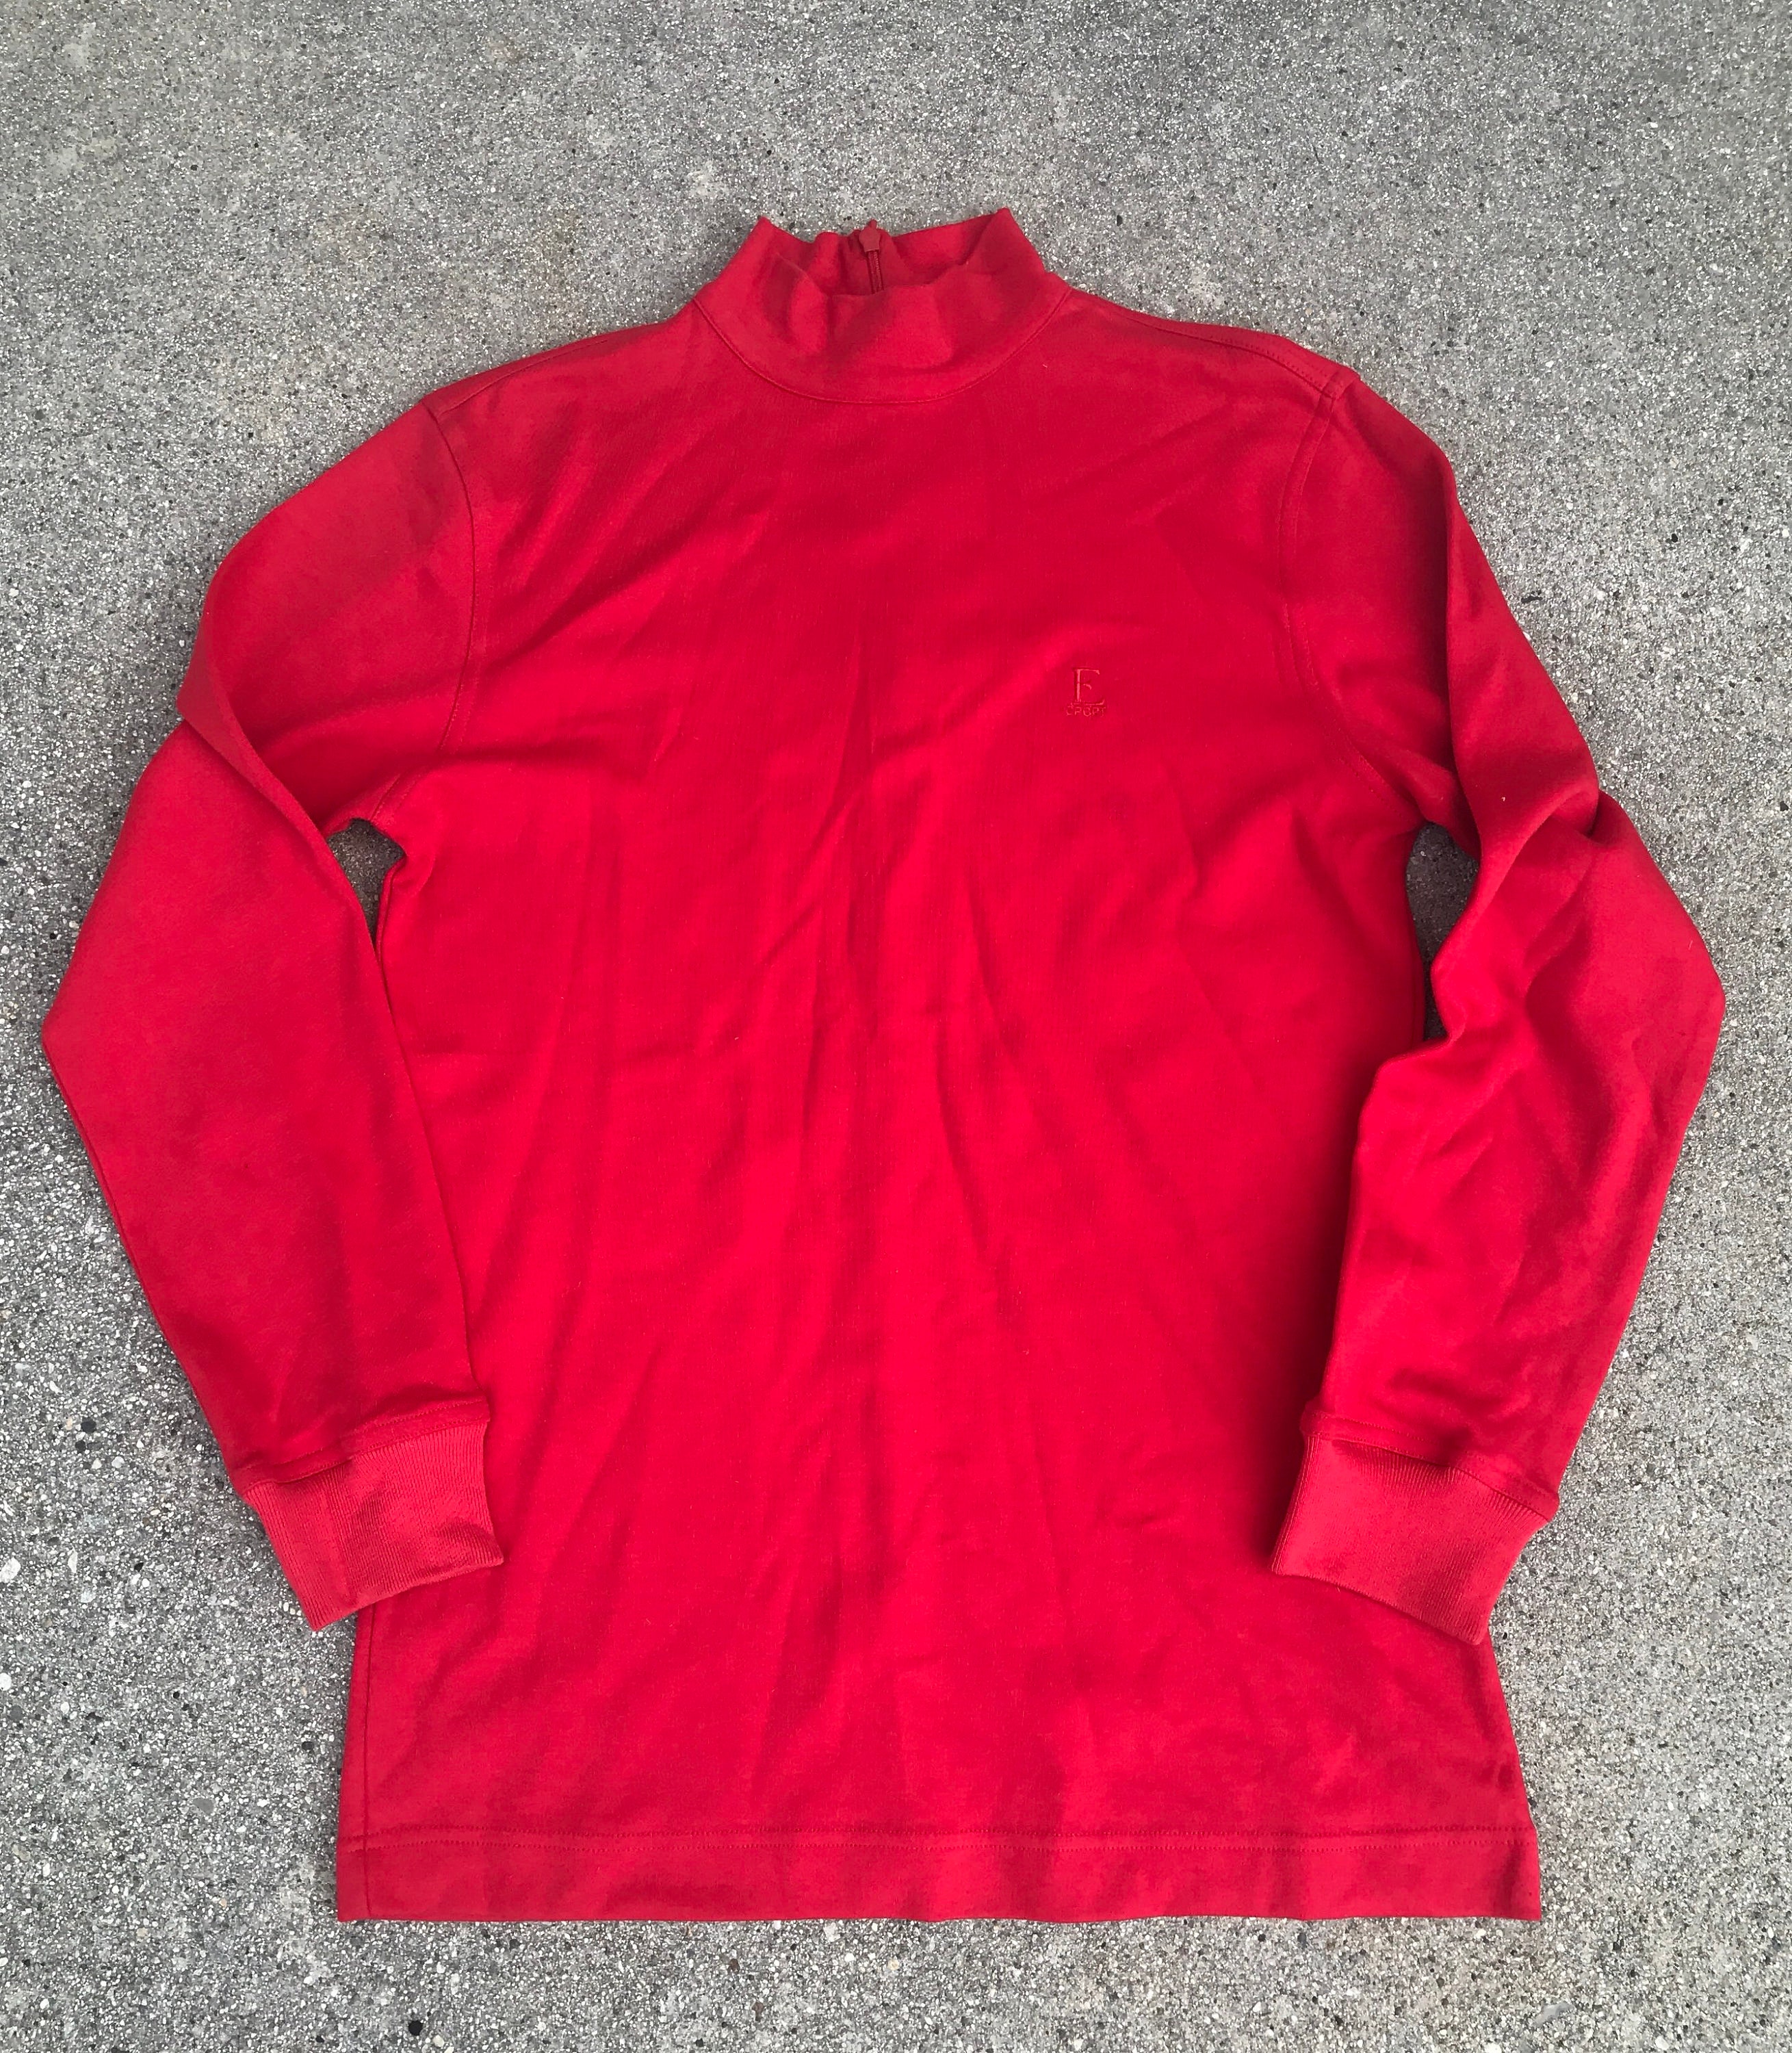 Escada Sport Vintage Red Turtleneck Long Sleeve Shirt - Etsy